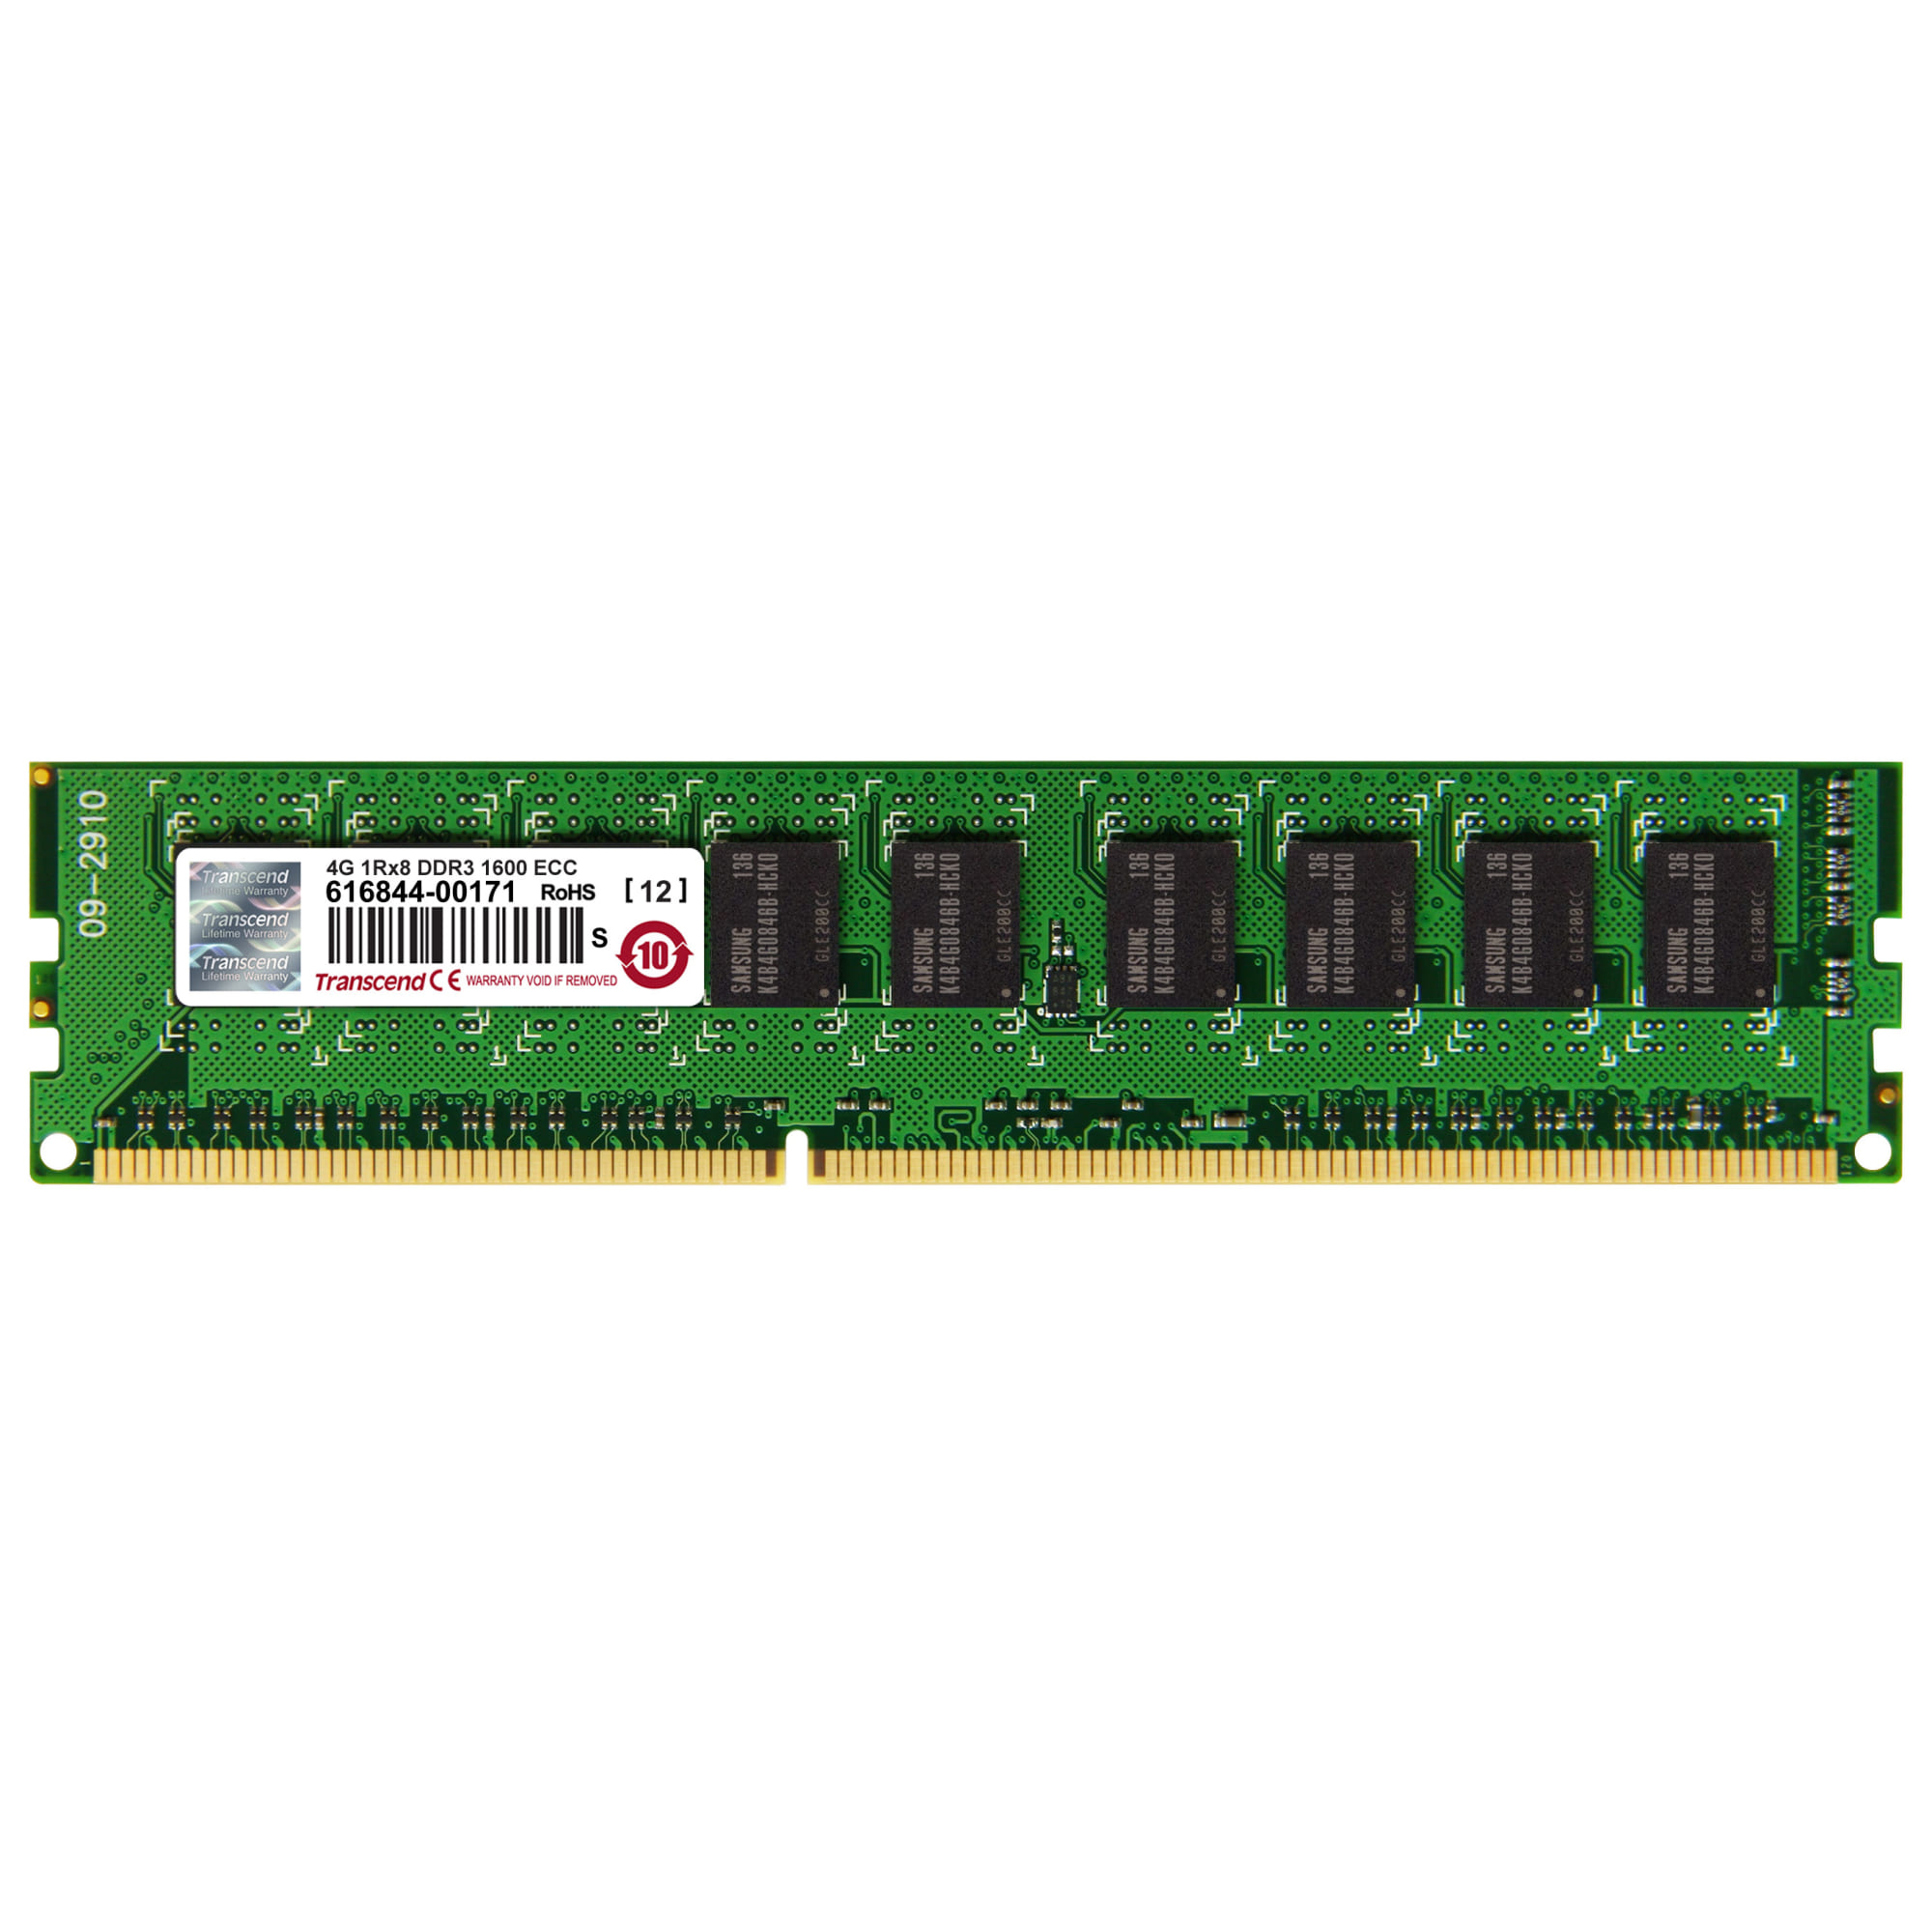 DDR3 240 PIN SD-RAM ECC (Server/Workstation) (Transcend 